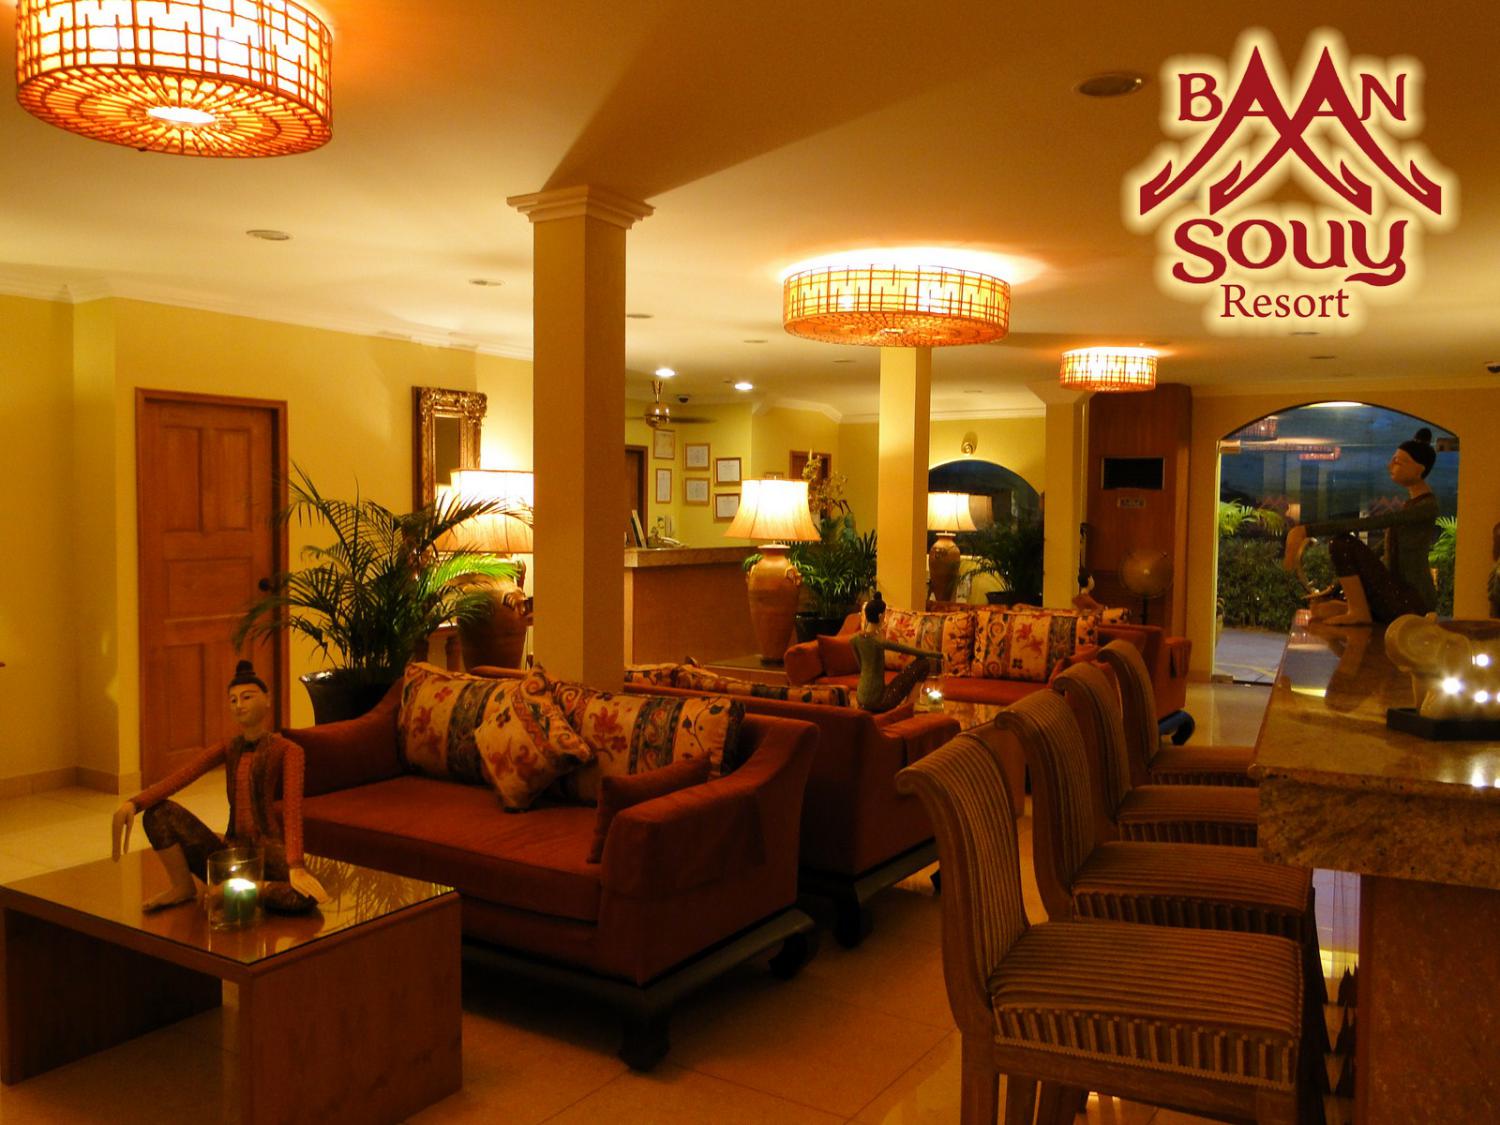 Baan Souy Resort - Image 1